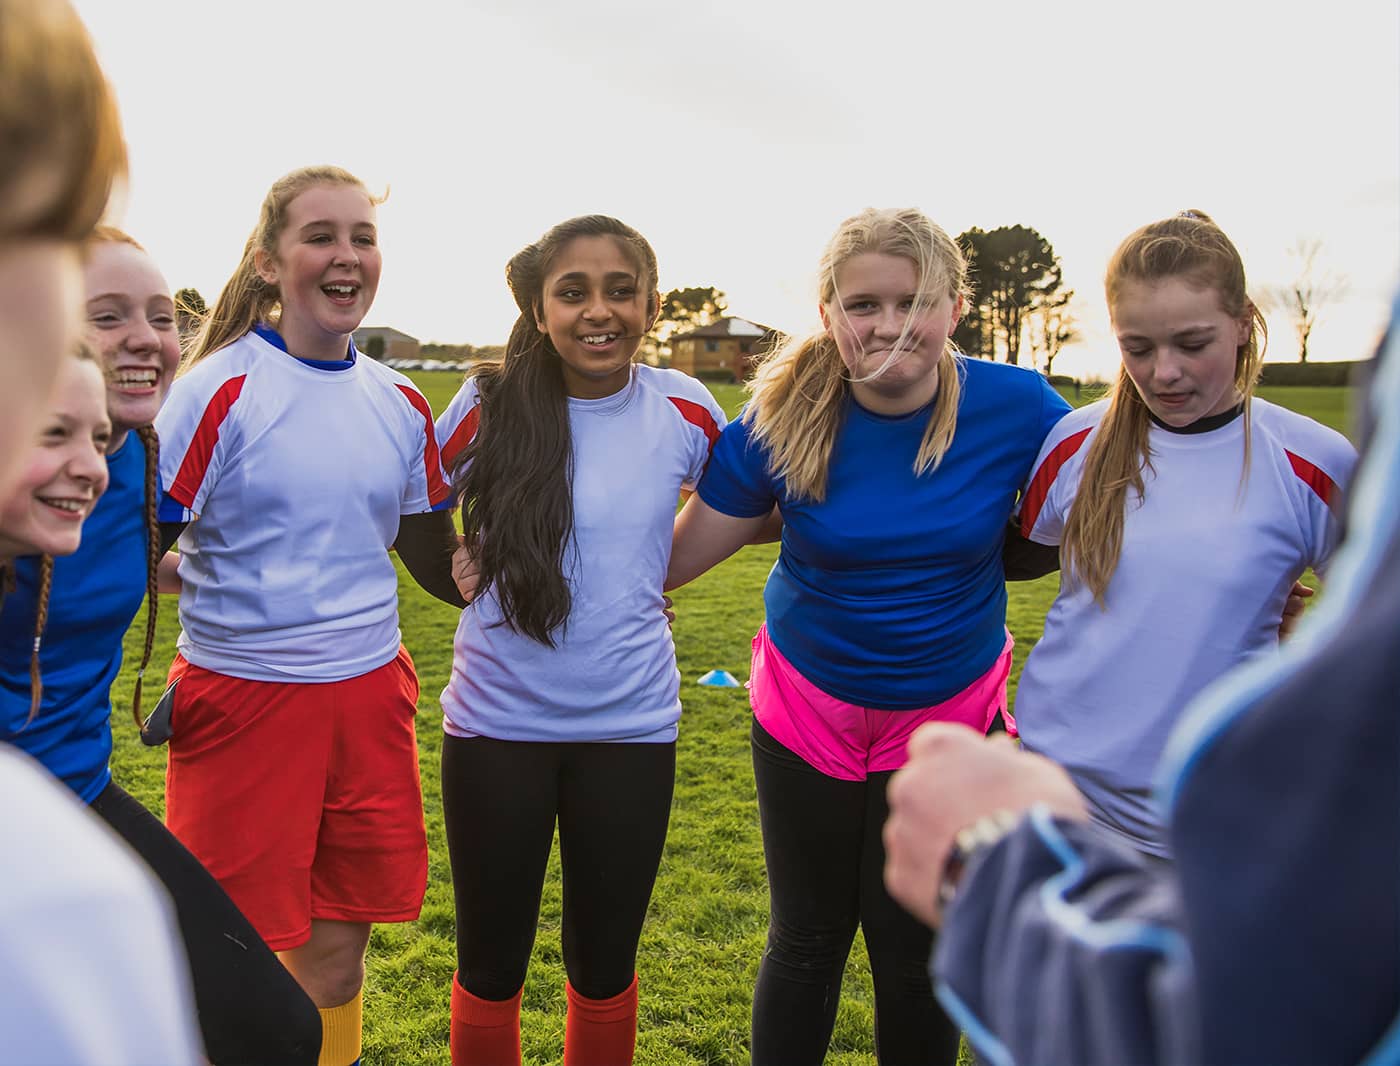 To Keep Girls Playing, Great Coaching is Key - Women's Sports